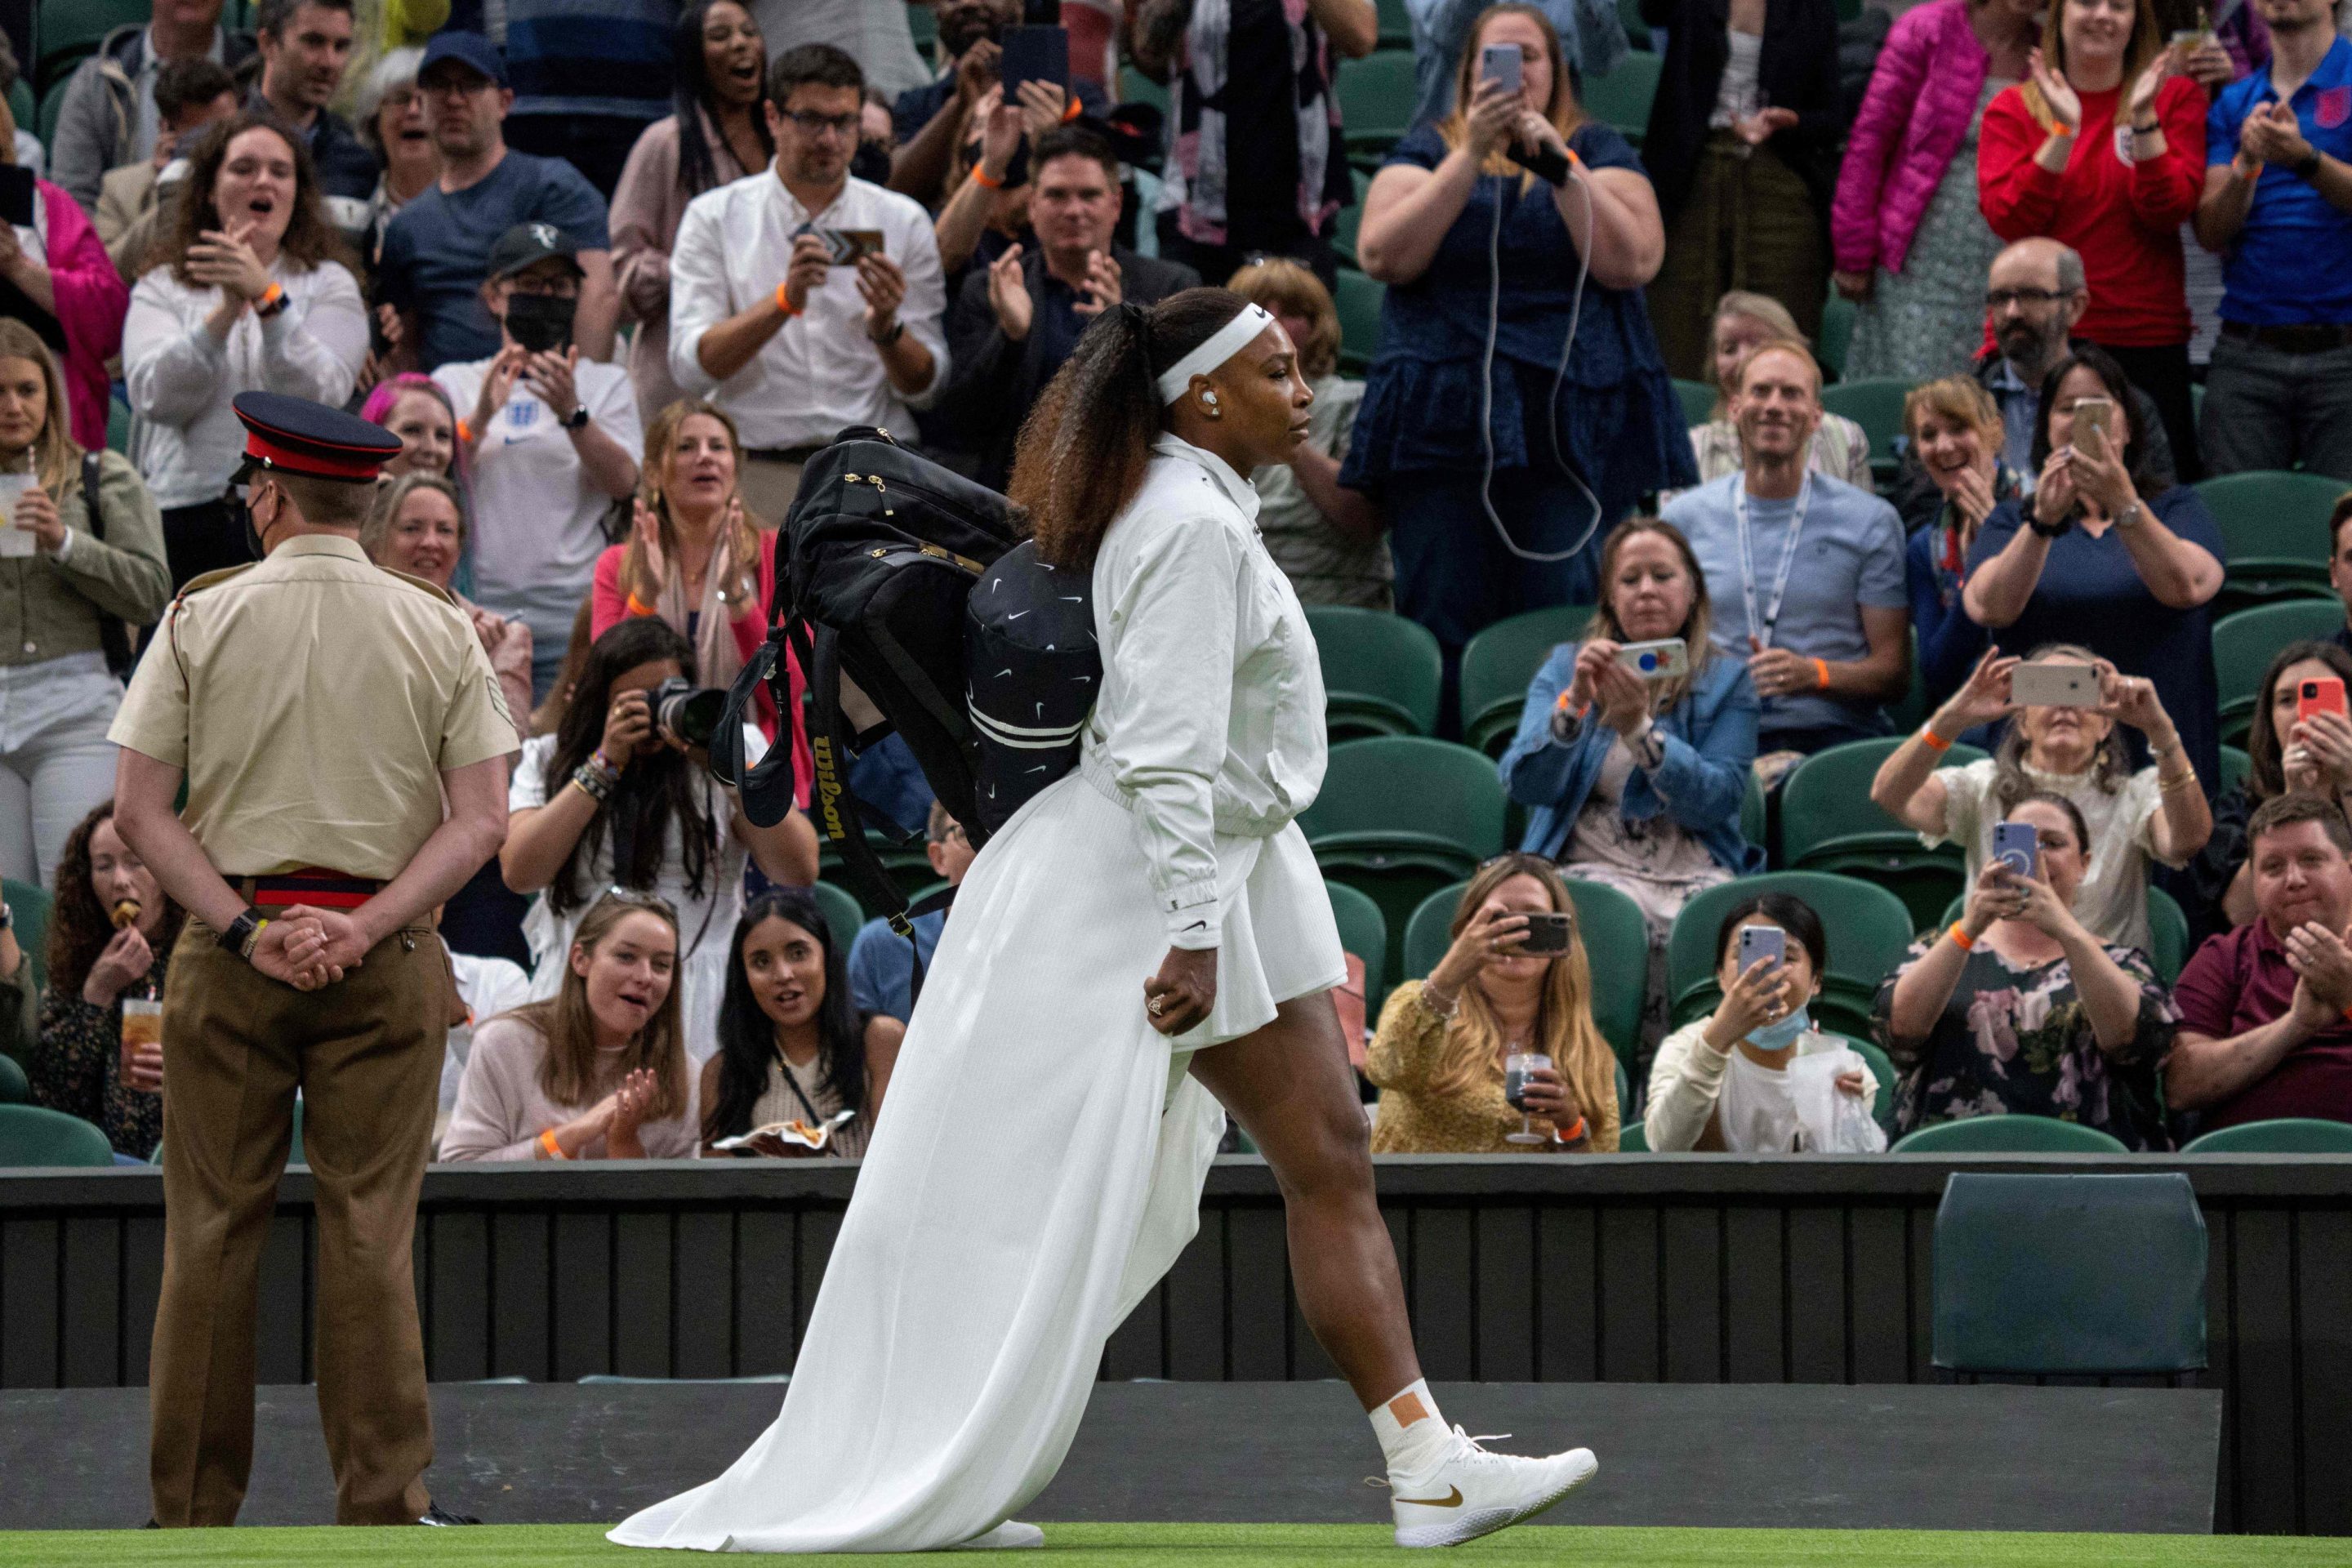 Serena Williams walks onto the court at Wimbledon 2021.